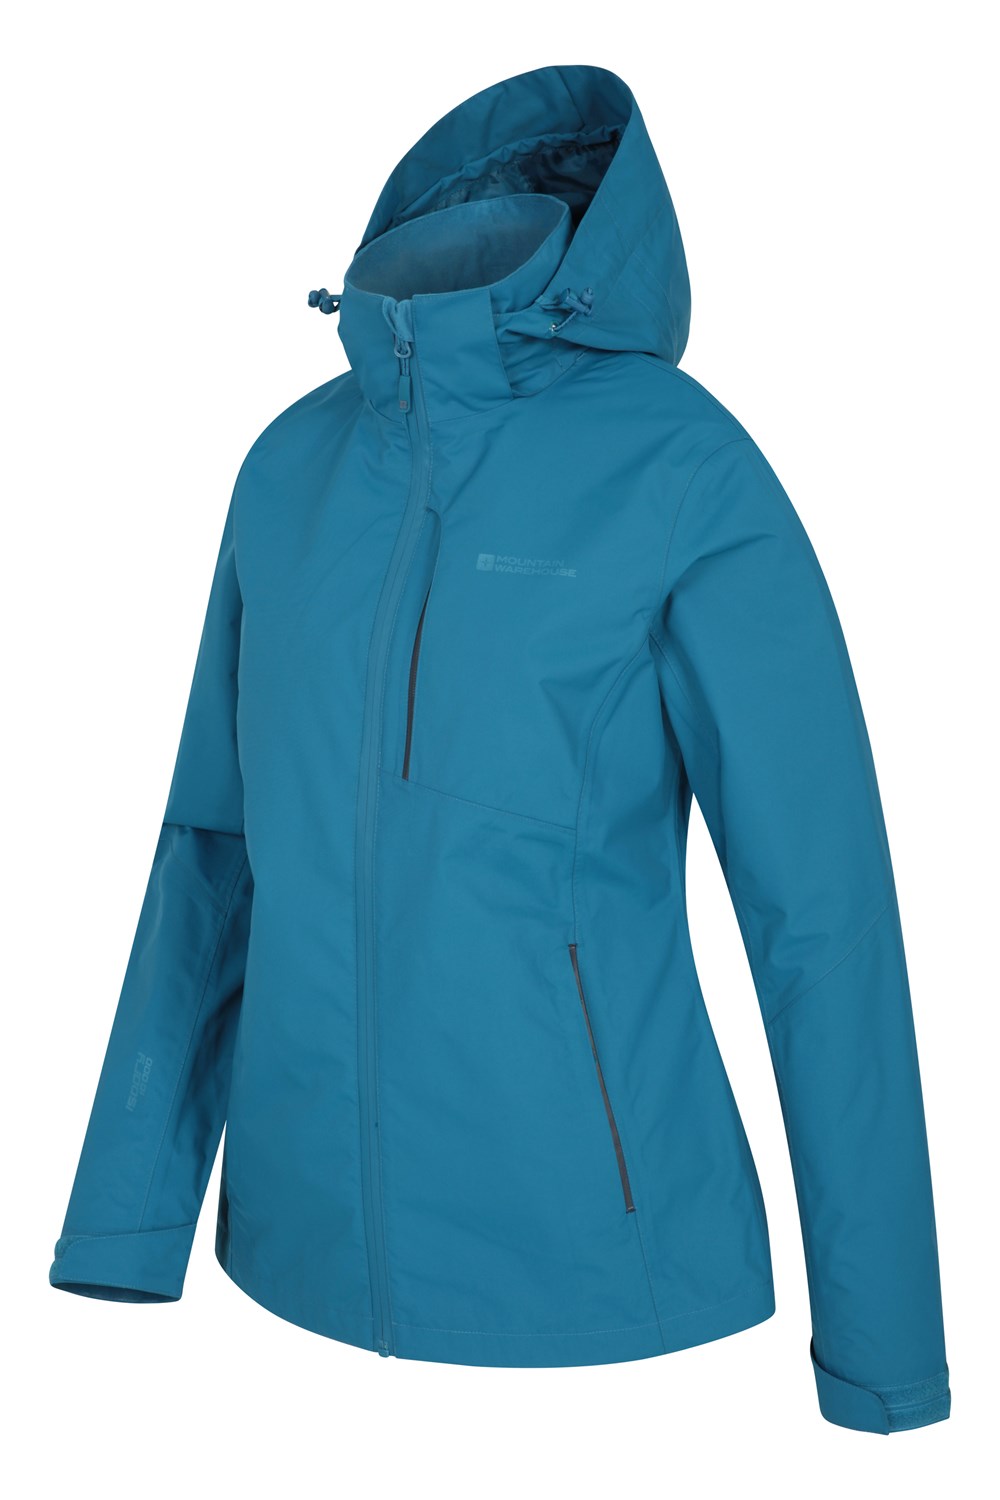 Mountain Warehouse Extreme Ladies Rain Jacket Waterproof Womens Cagoule ...